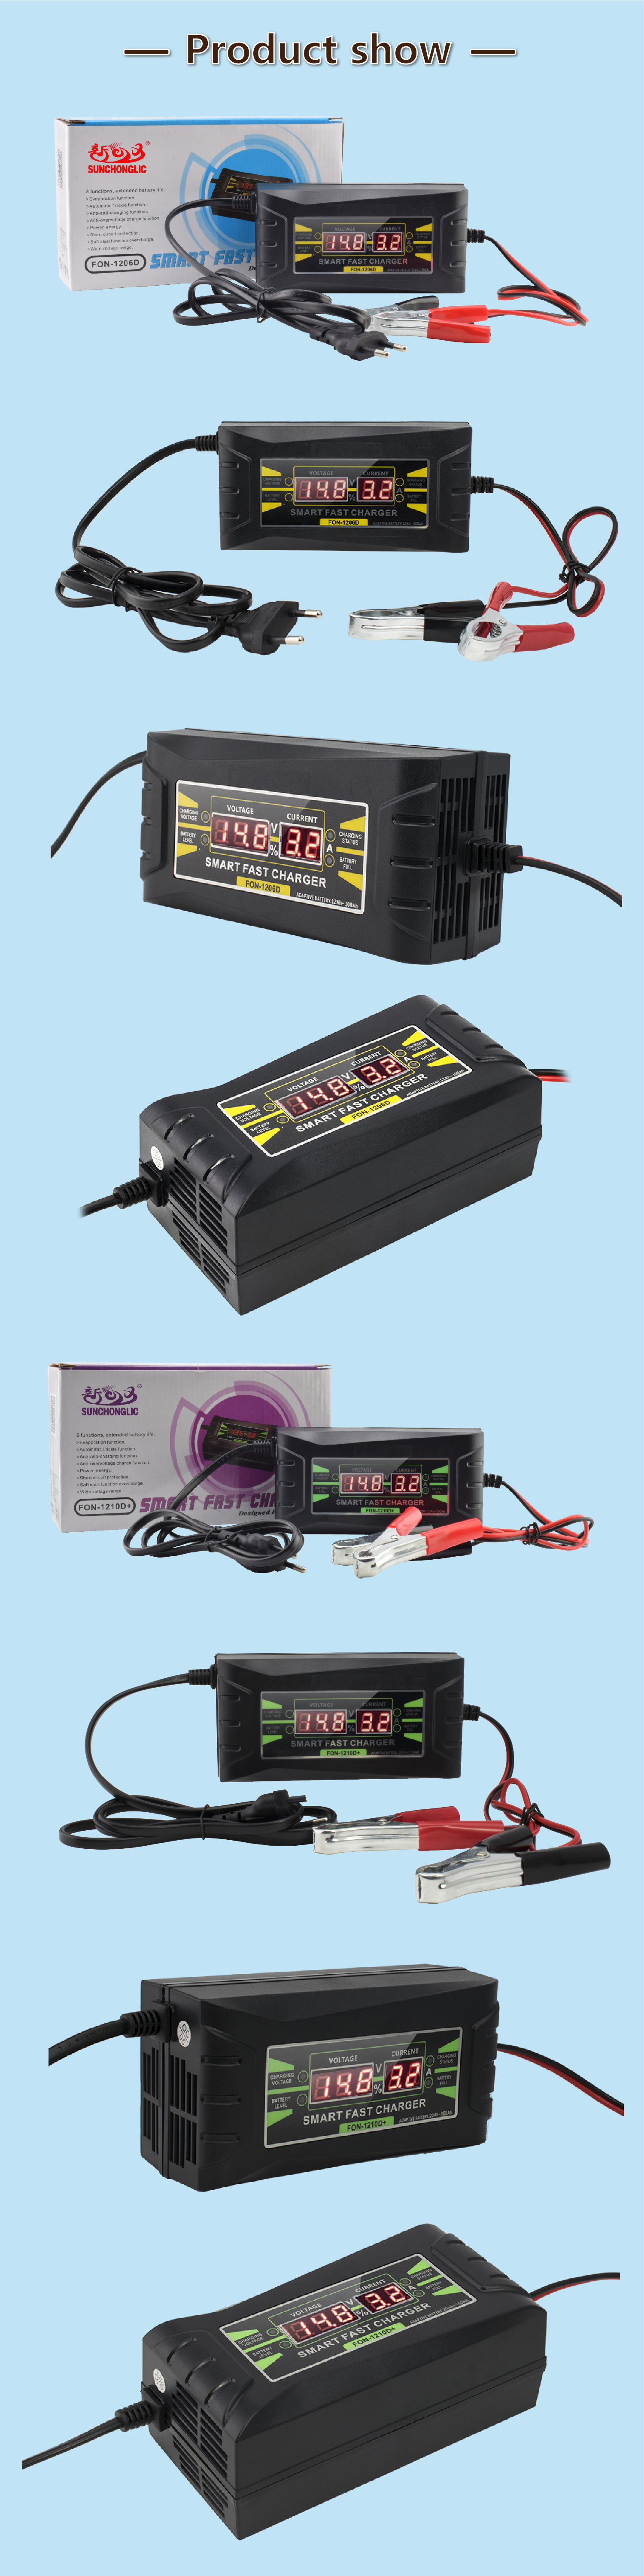 FON-1206D - AGM/GEL Battery Charger - Foshan Sunchonglic Electric Appliance  Co., Ltd.